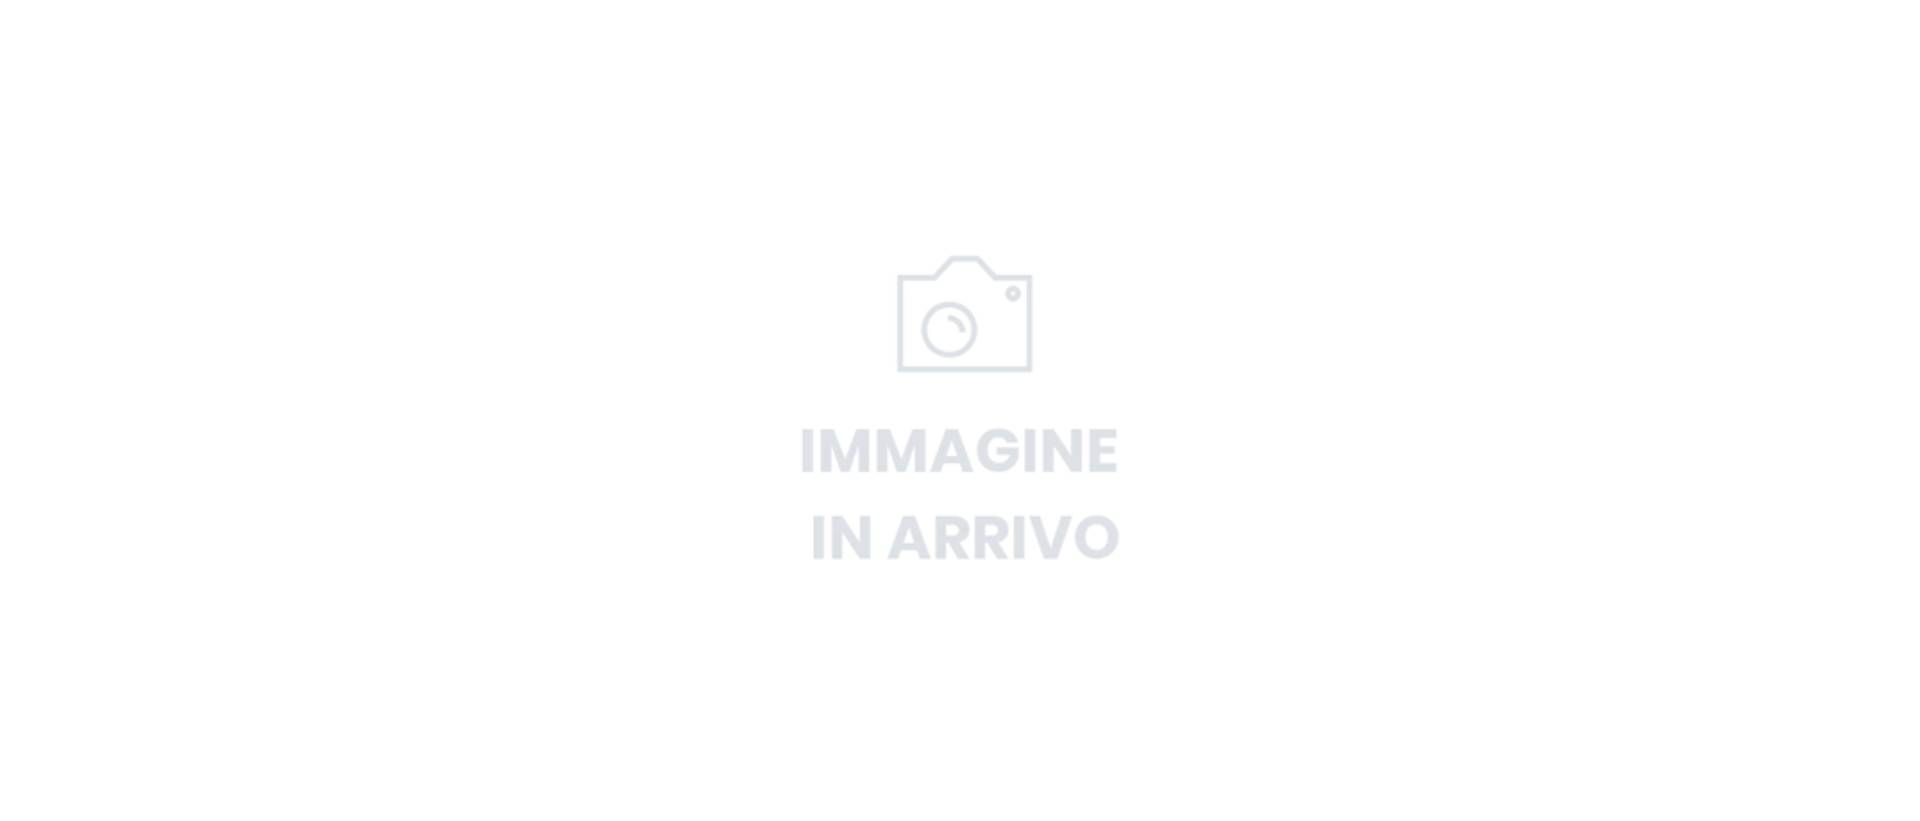 Nuova Clio(1440 × 616 Px)